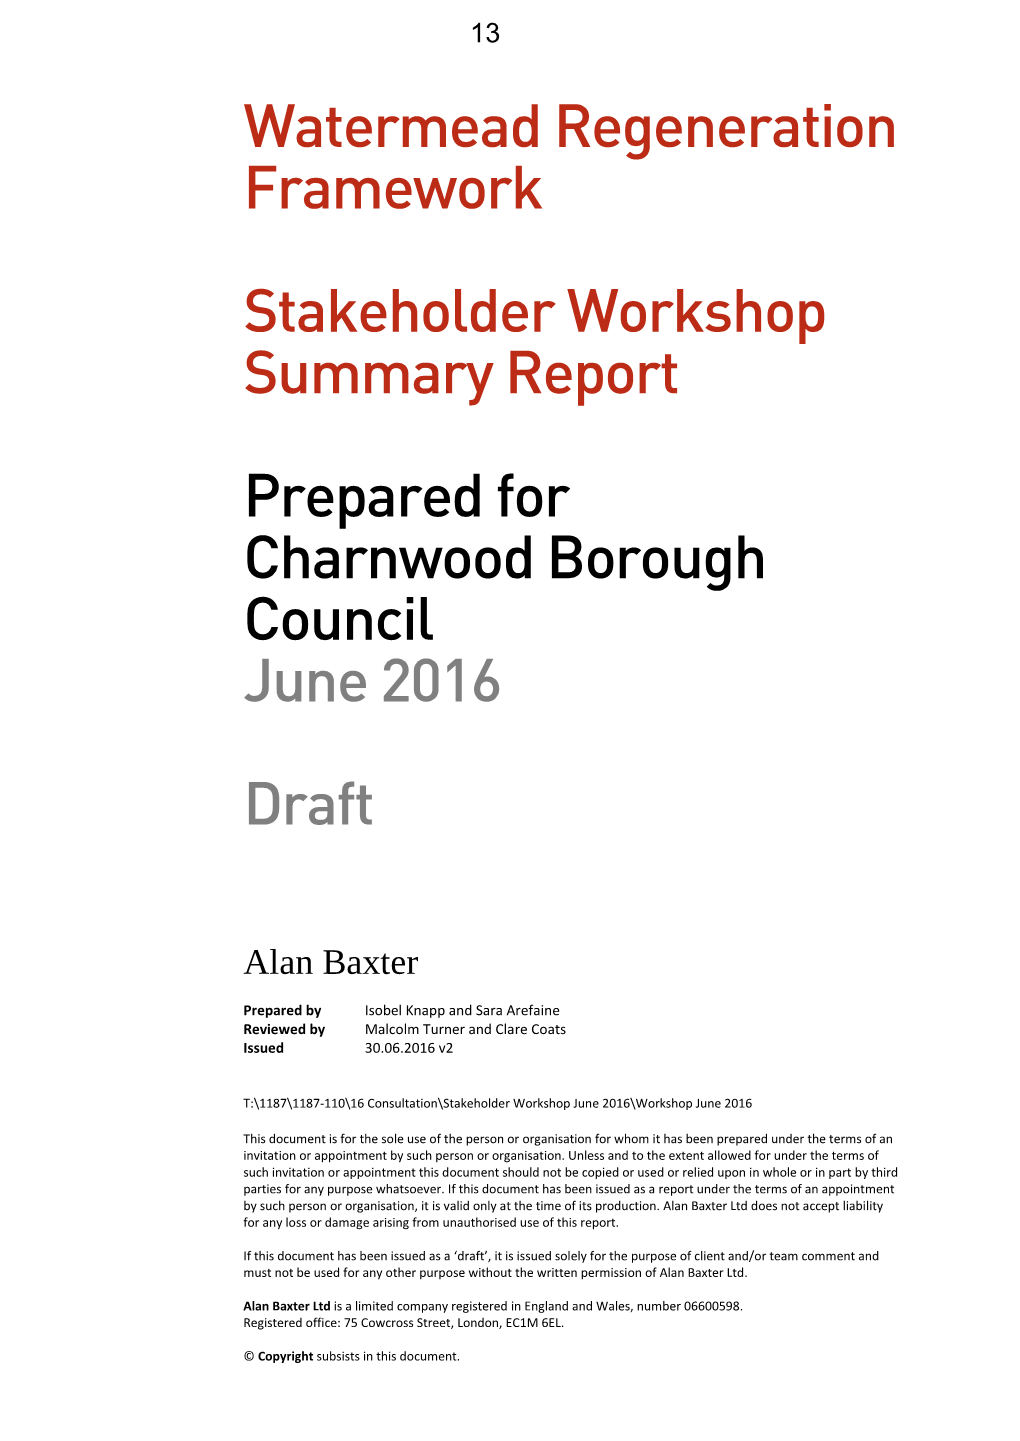 Watermead Regeneration Framework Stakeholder Workshop Summary